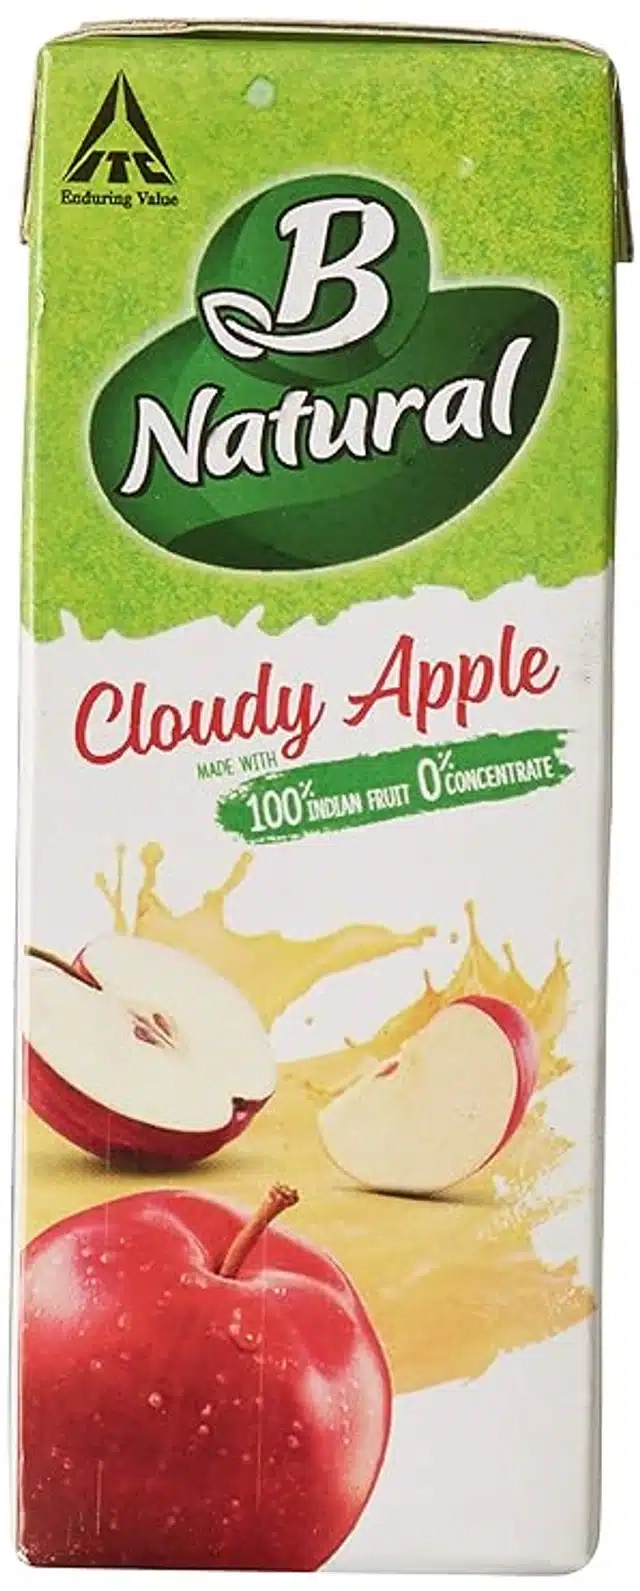 B Natural Apple Fruit Juice 4X180 ml (Pack of 4)